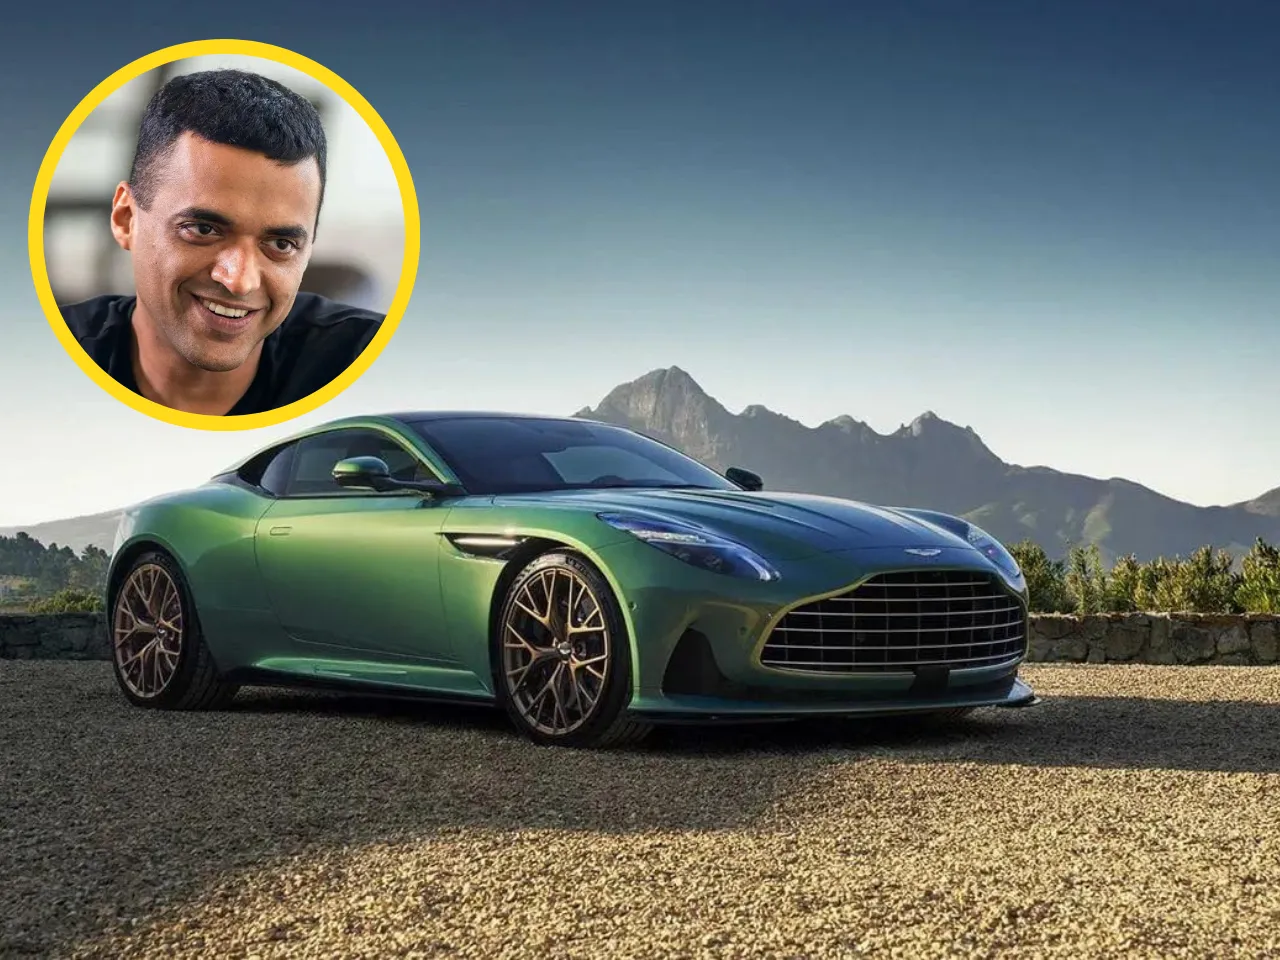 Zomato CEO Deepinder Goyal buys Rs 4.59 crore Aston Martin DB12 supercar: Report